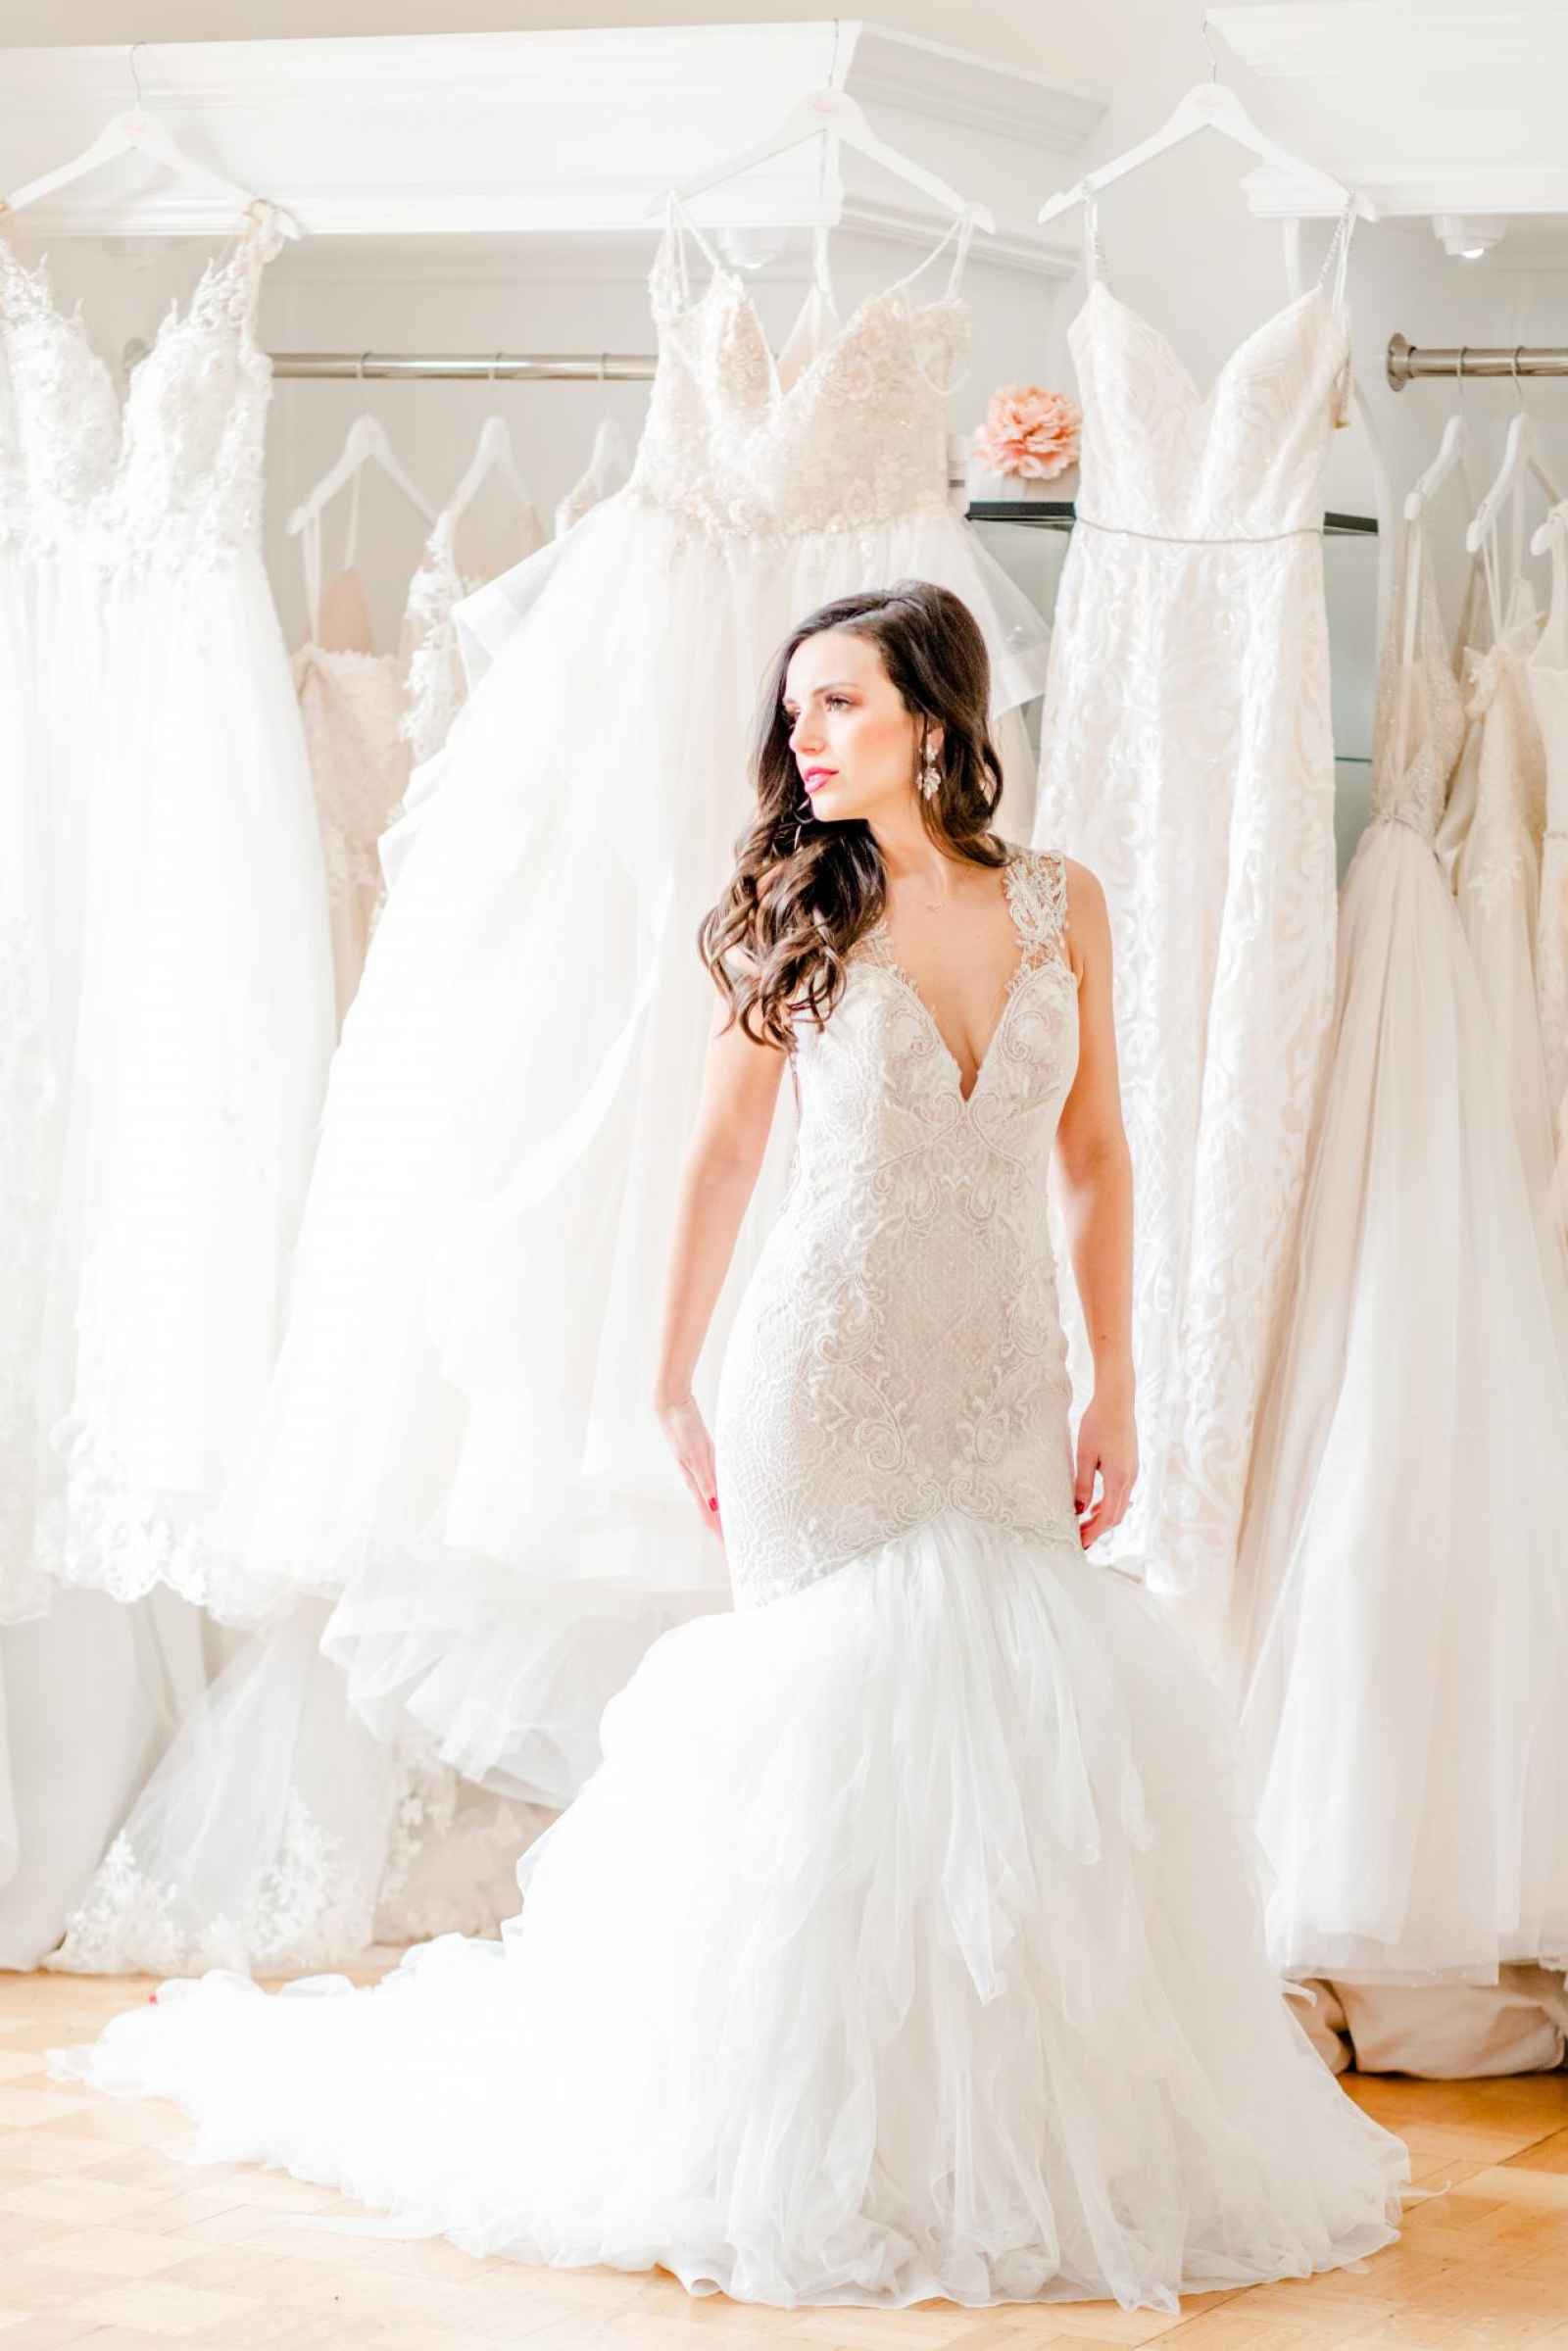 Find Your Dream Wedding Dress in Fort Wayne, Indiana: A WeddingDay ...